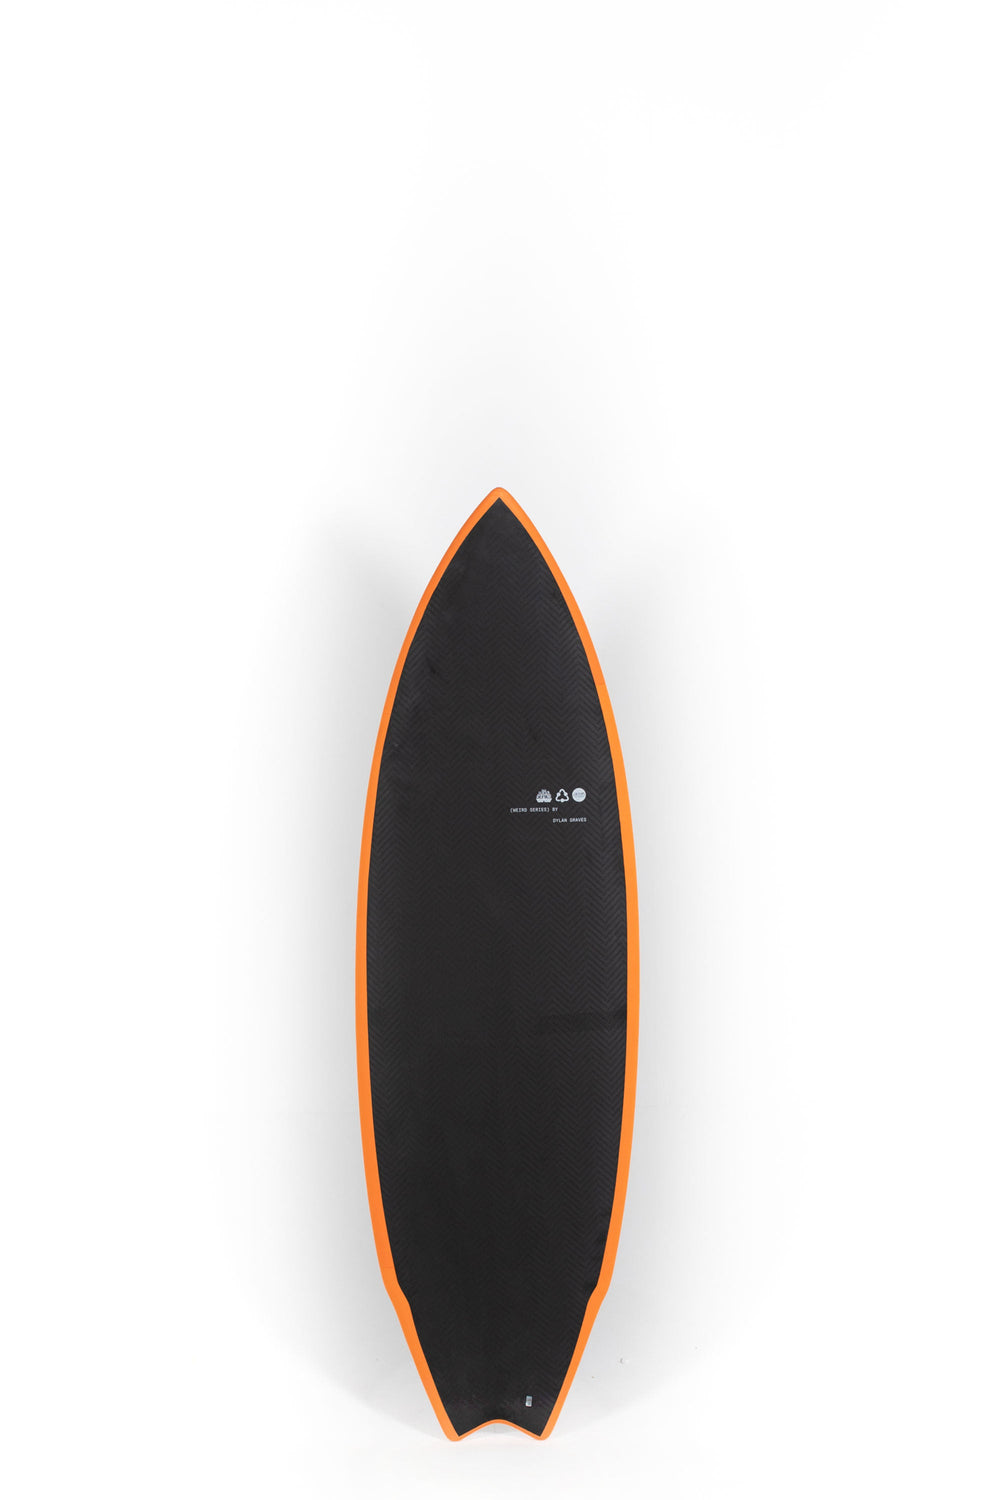 Pukas Surf Shop - HaydenShapes Surfboard - WEIRD WAVES SOFT - 6'0